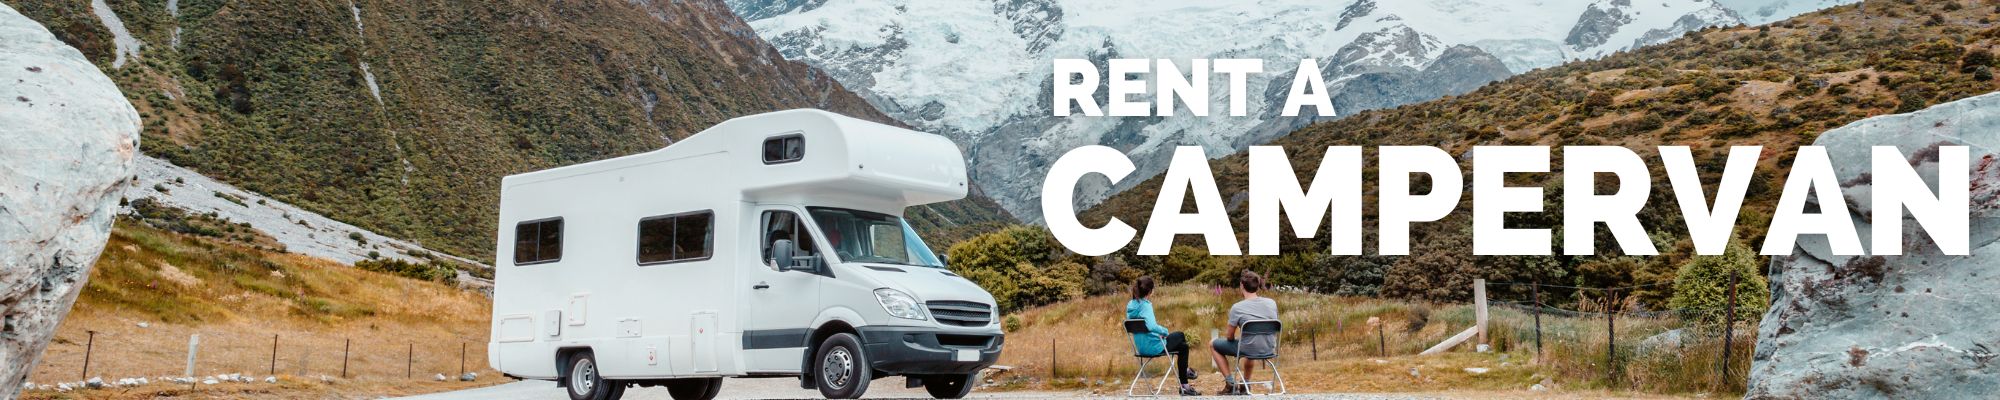 renting a campervan in canada